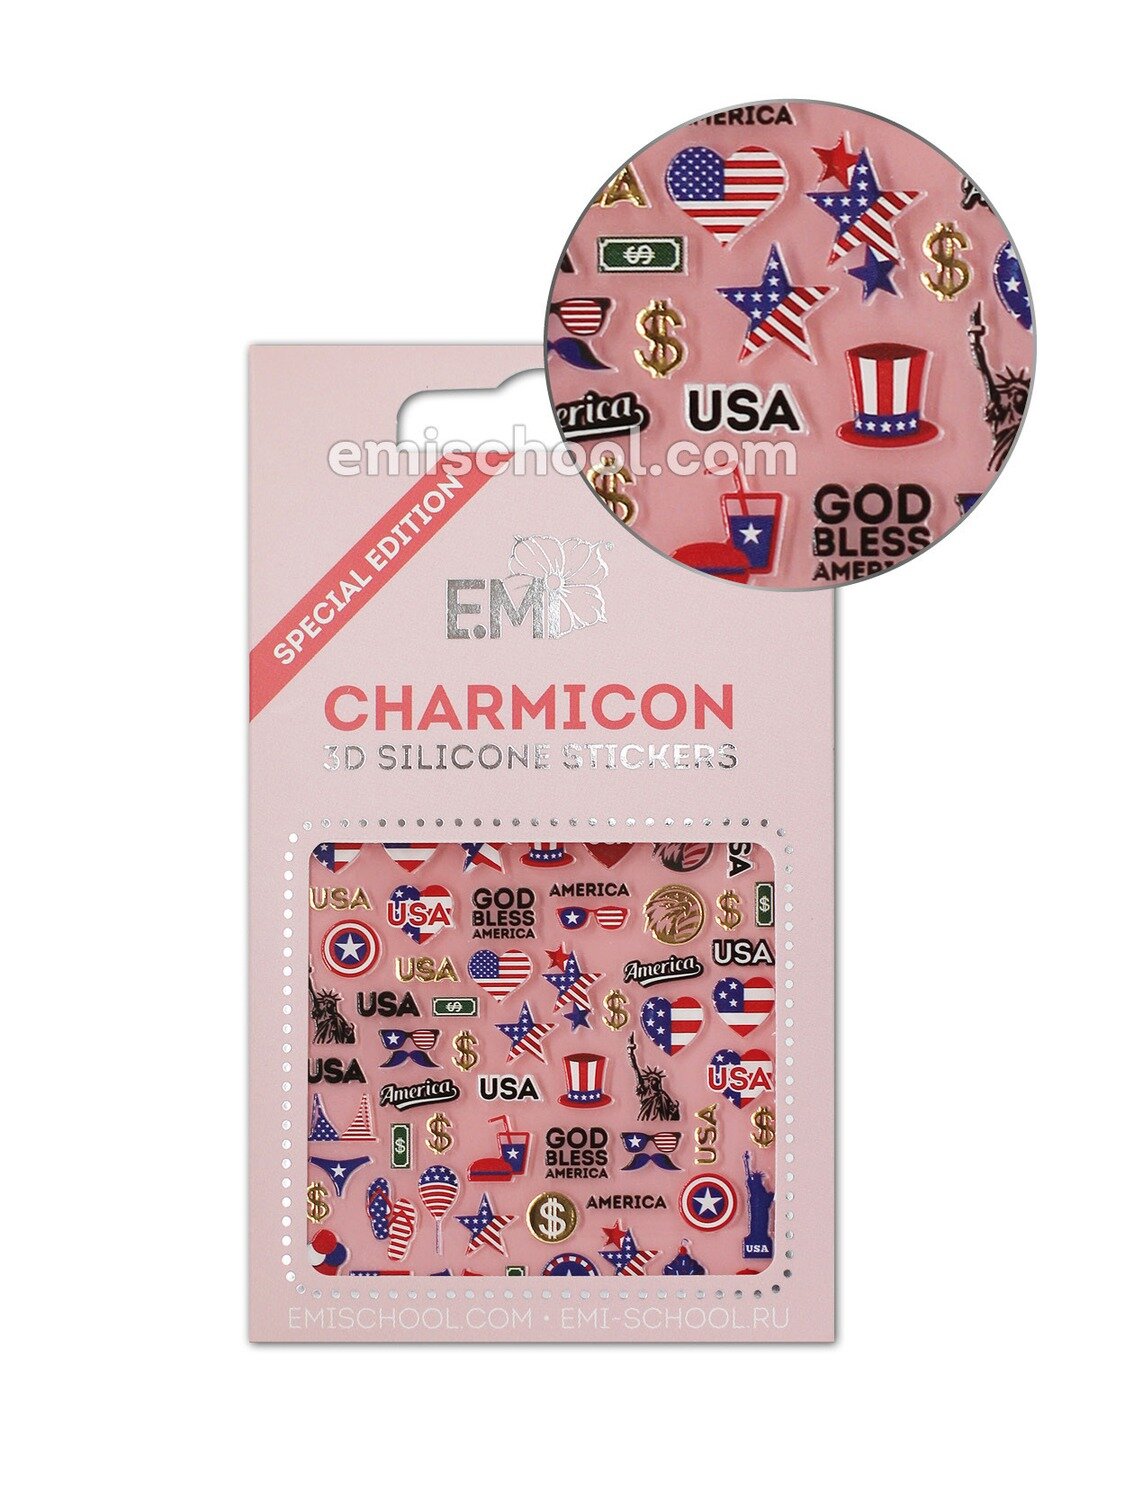 Charmicon 3D Silicone Stickers USA